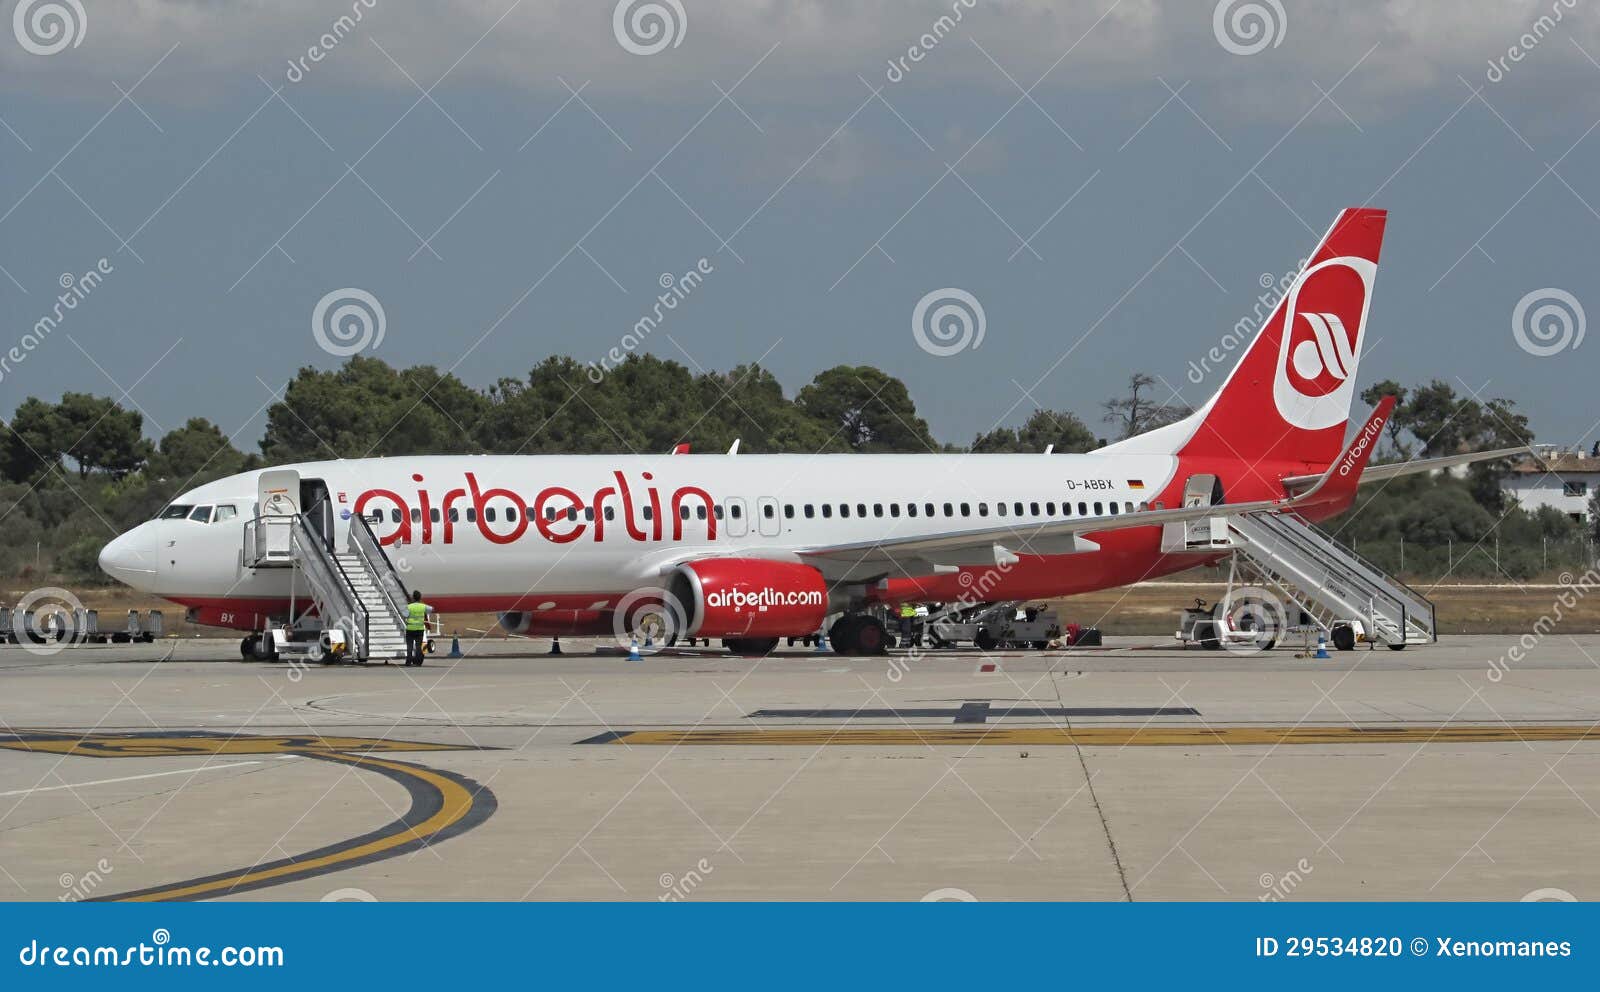 airberlin.com  Boeing 737-800